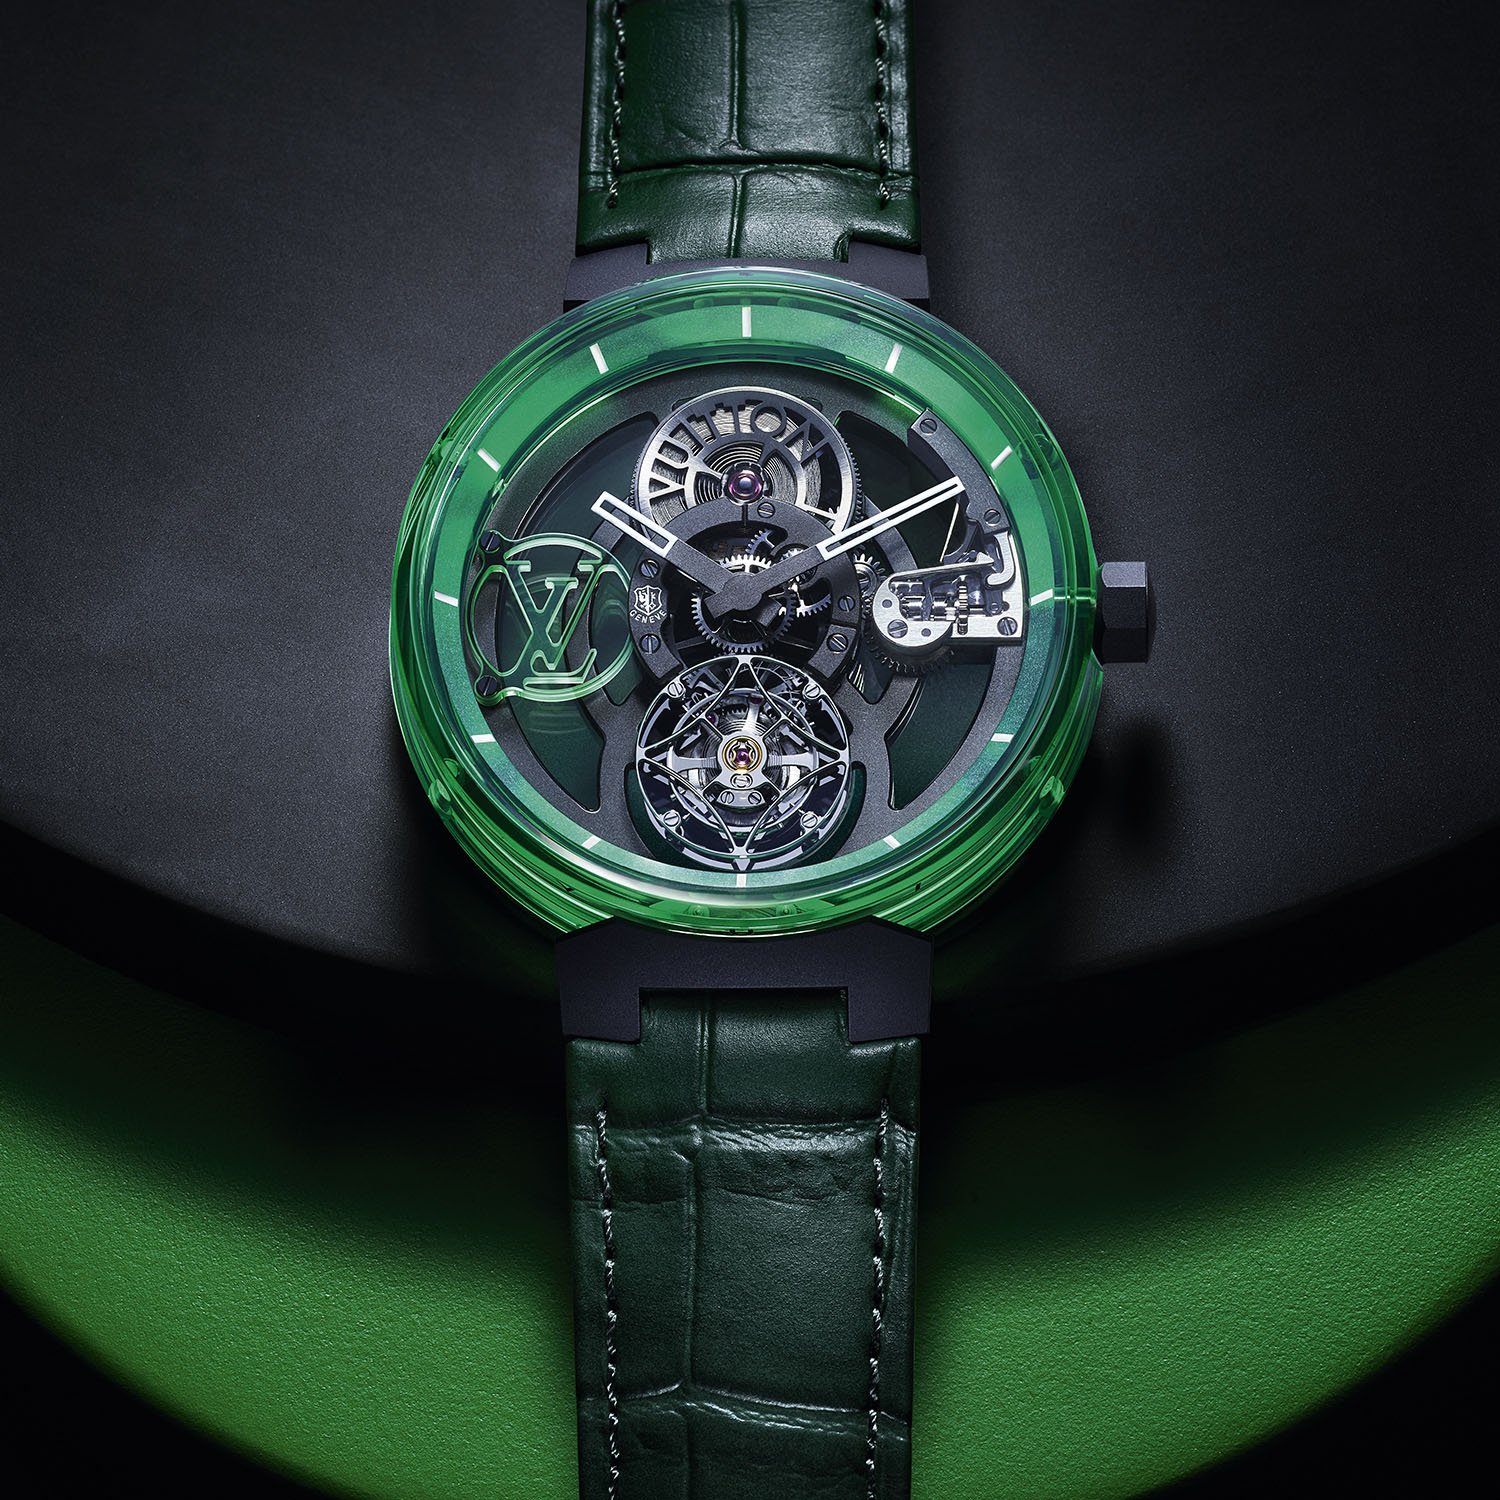 Louis Vuitton's Tambour Spin Time Regatta Timepiece Collection